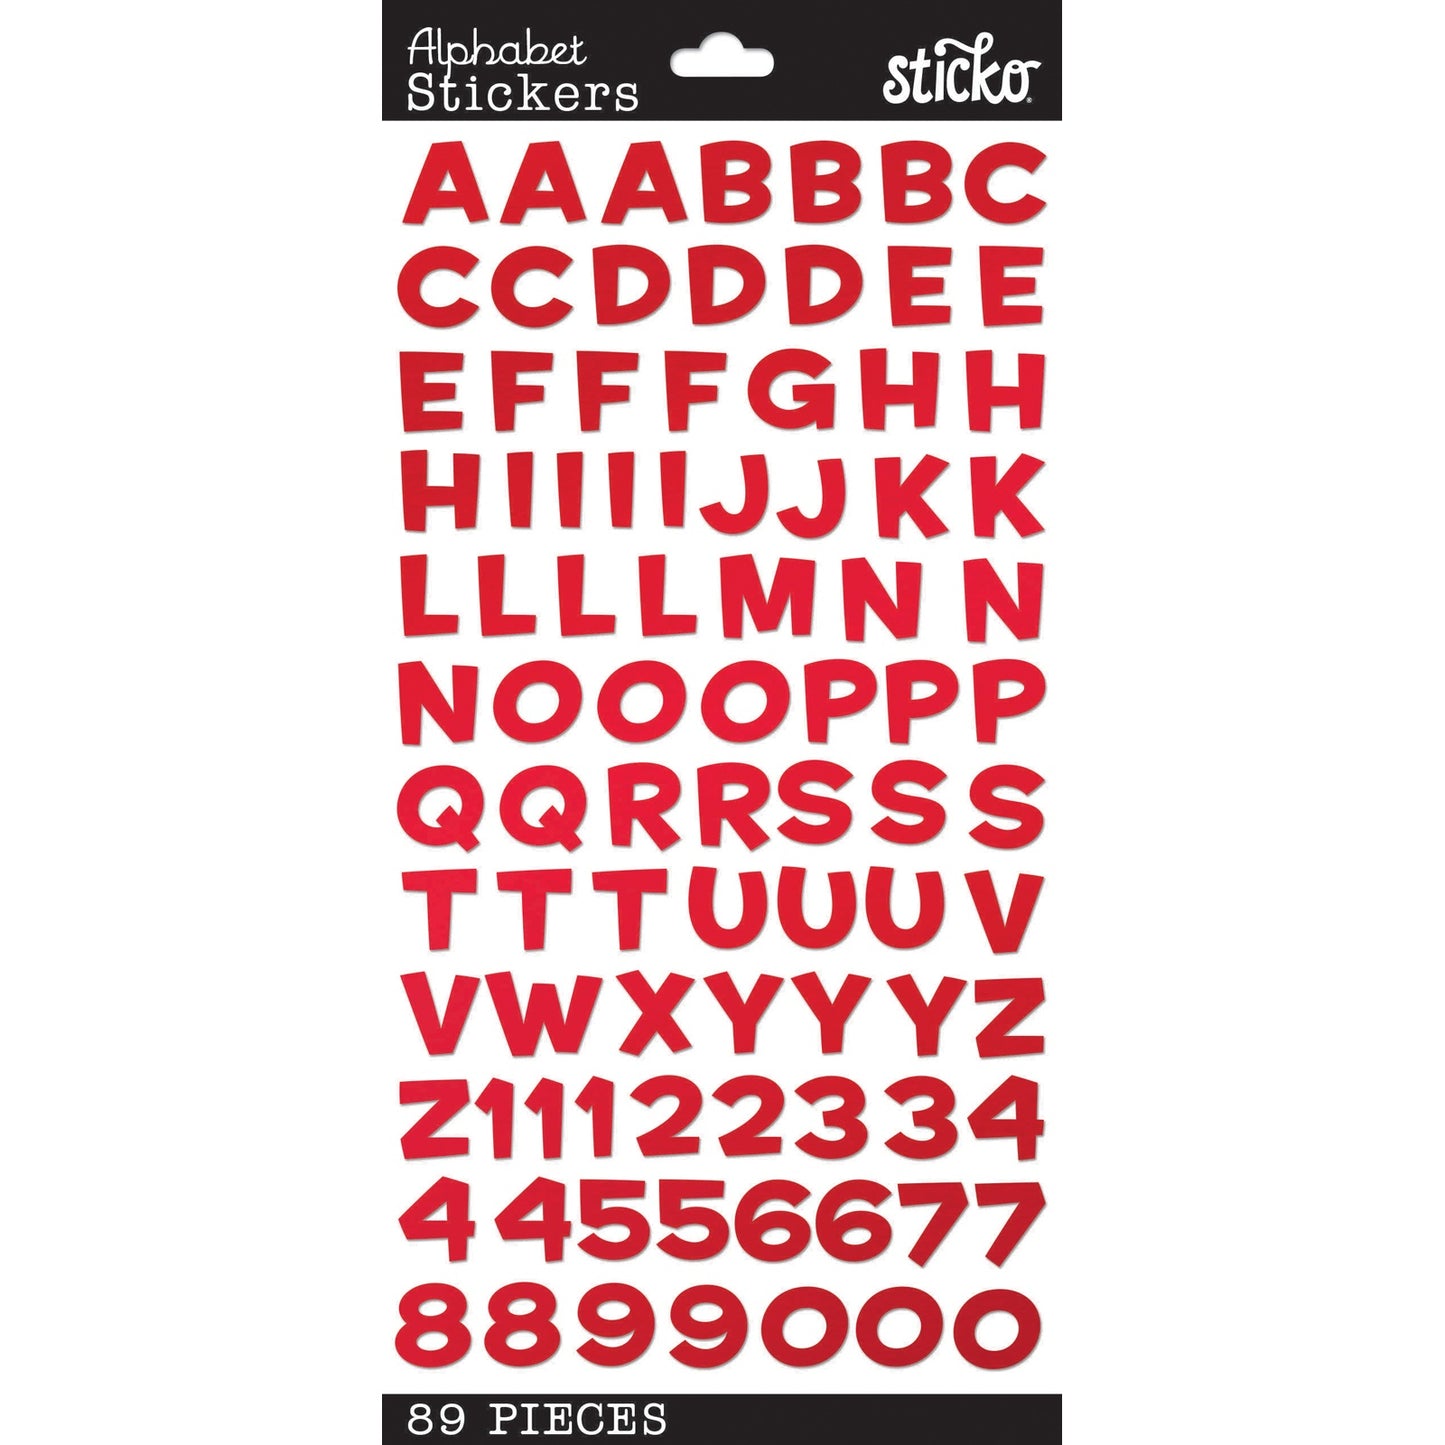 Sticko Alphabet Stickers Funhouse Red Metallic